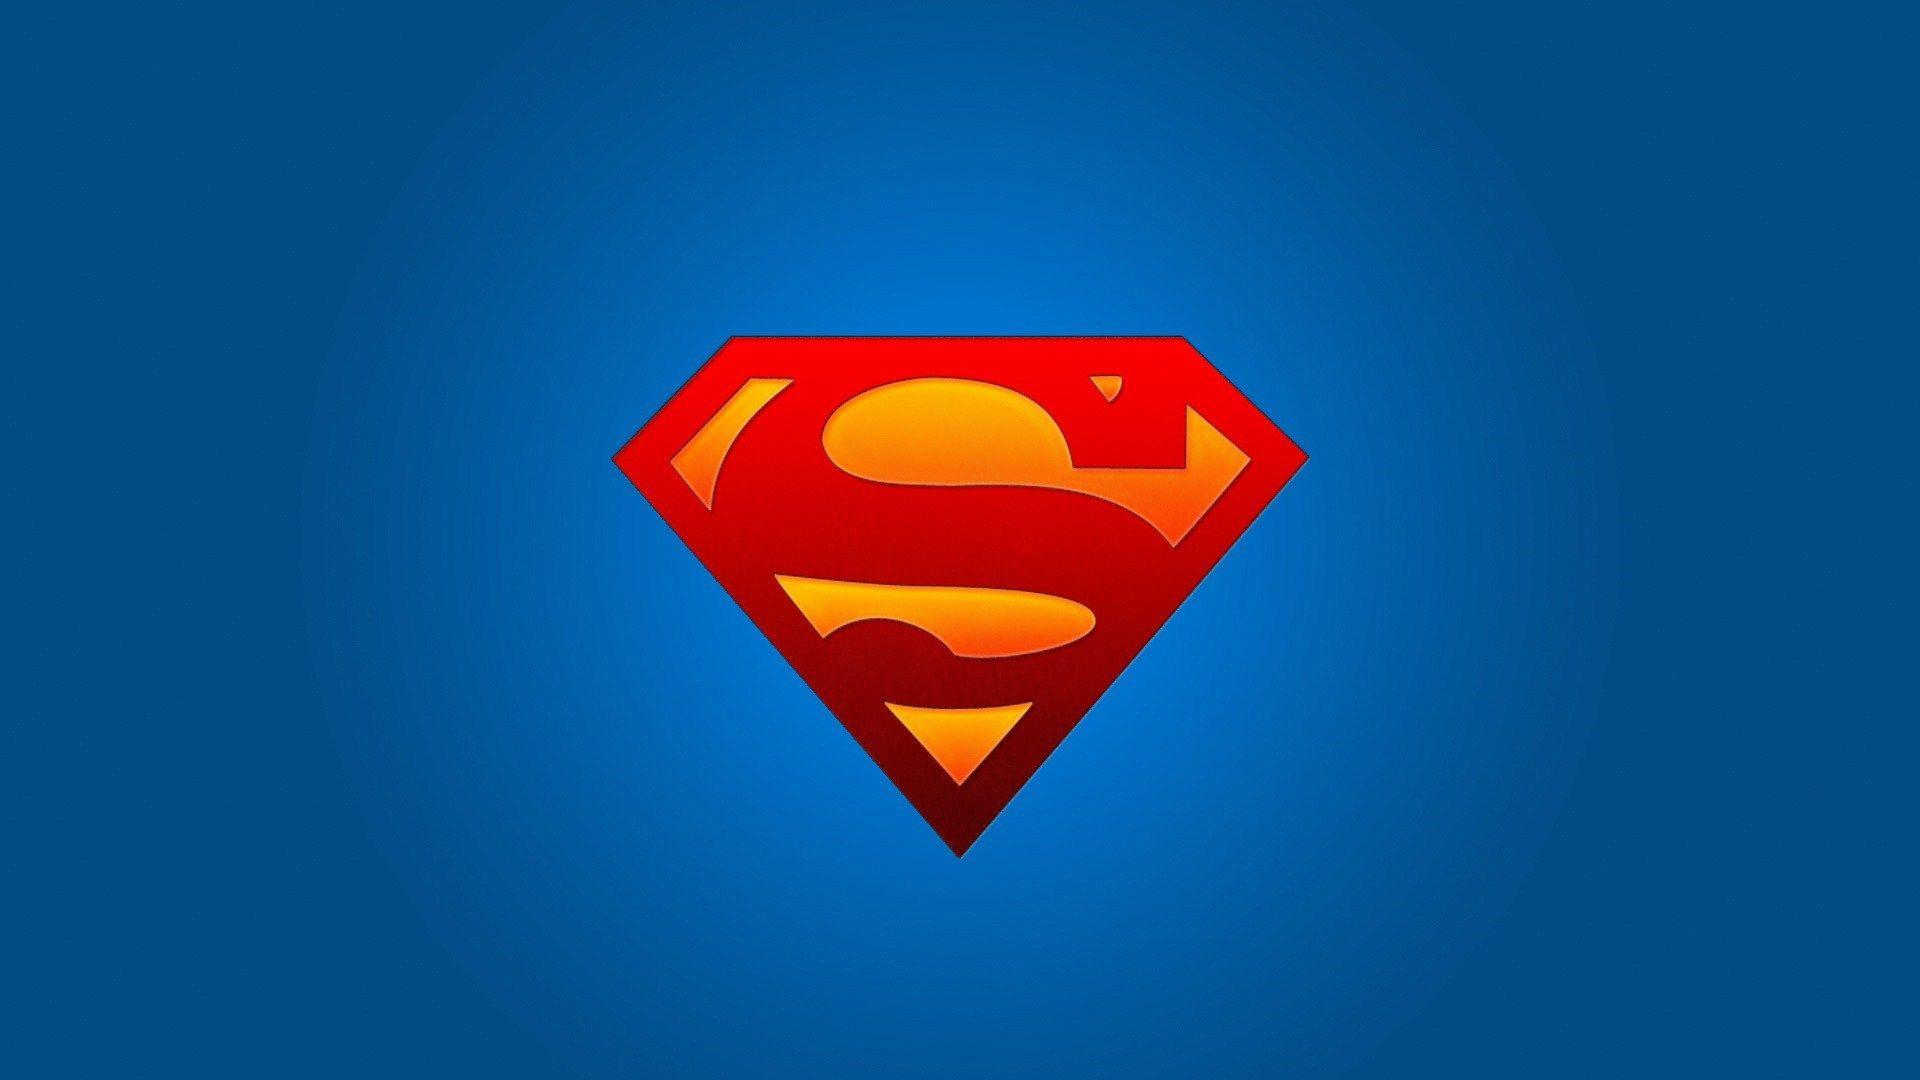 Free 1920x1080 Superman Logos Wallpaper Full HD 1080p Background